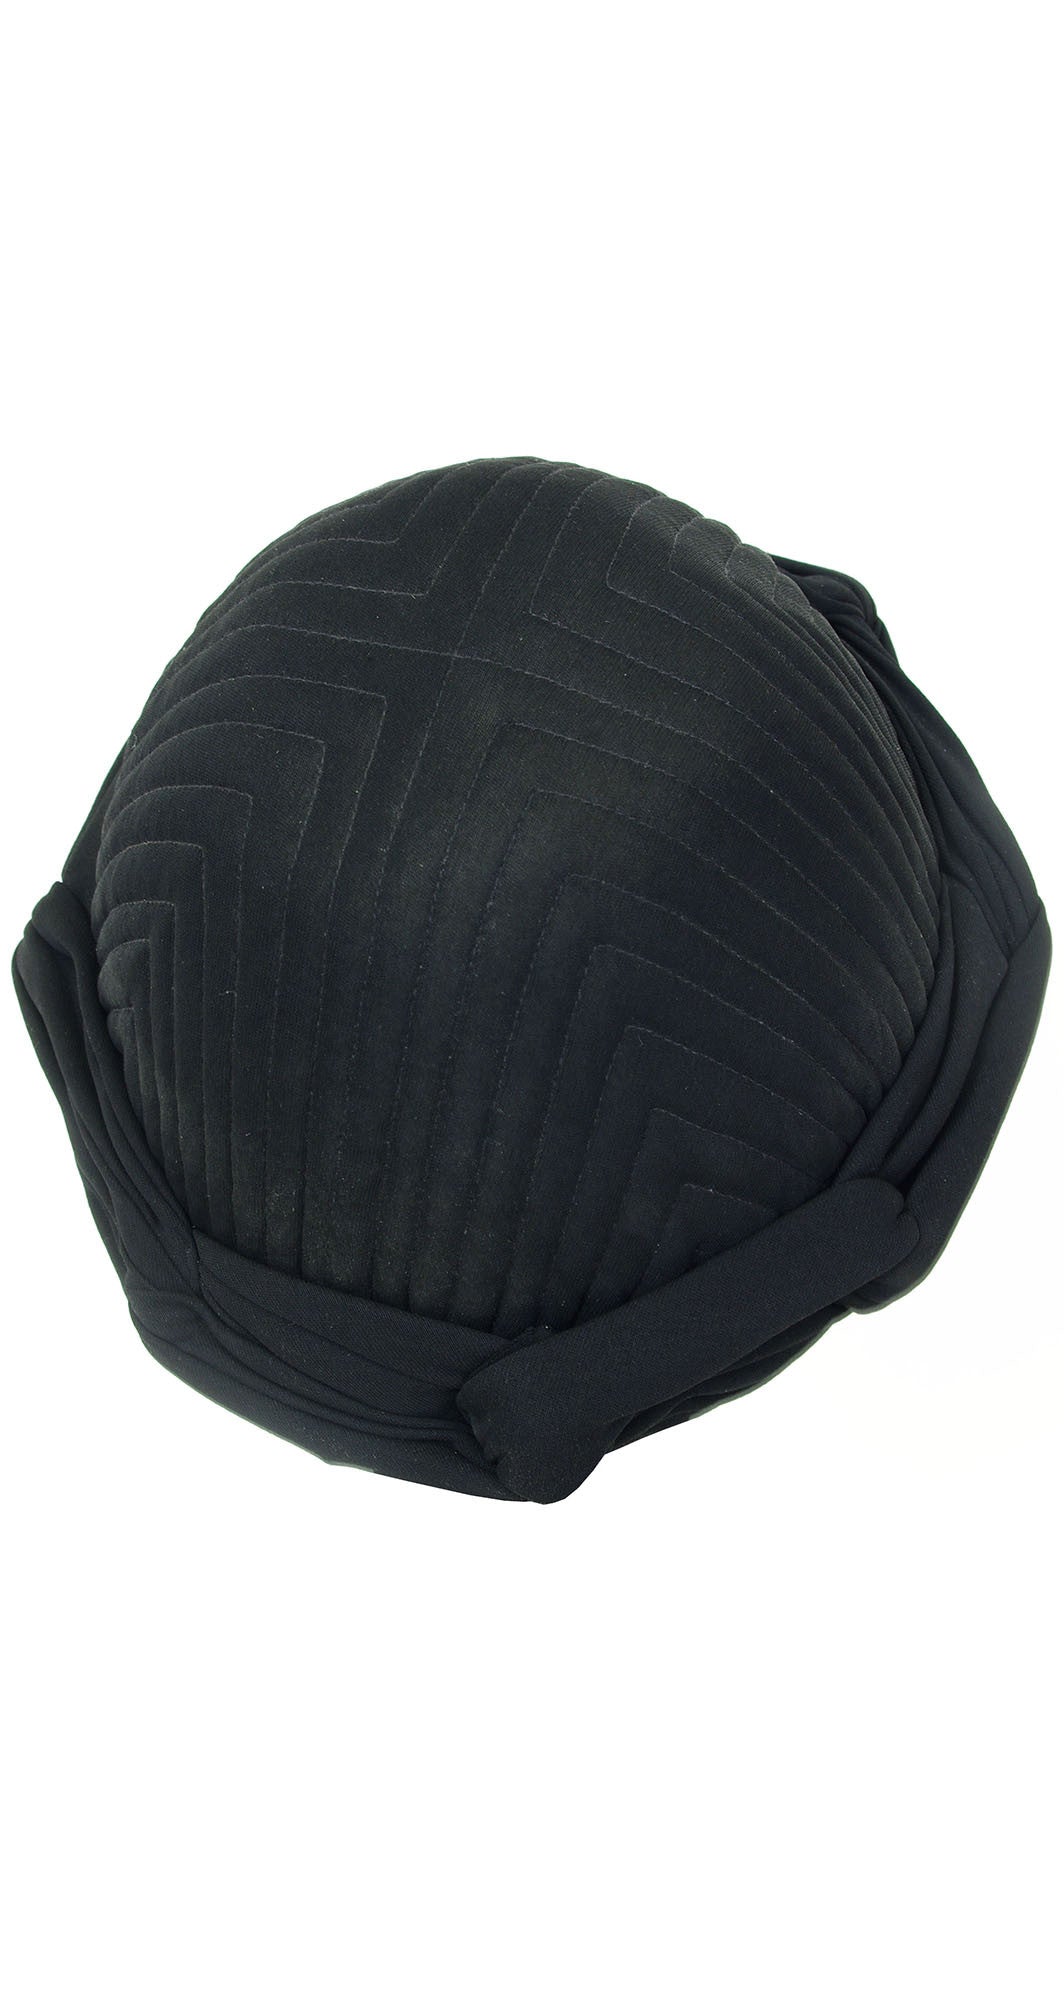 1970s Rare Black Knotted Turban